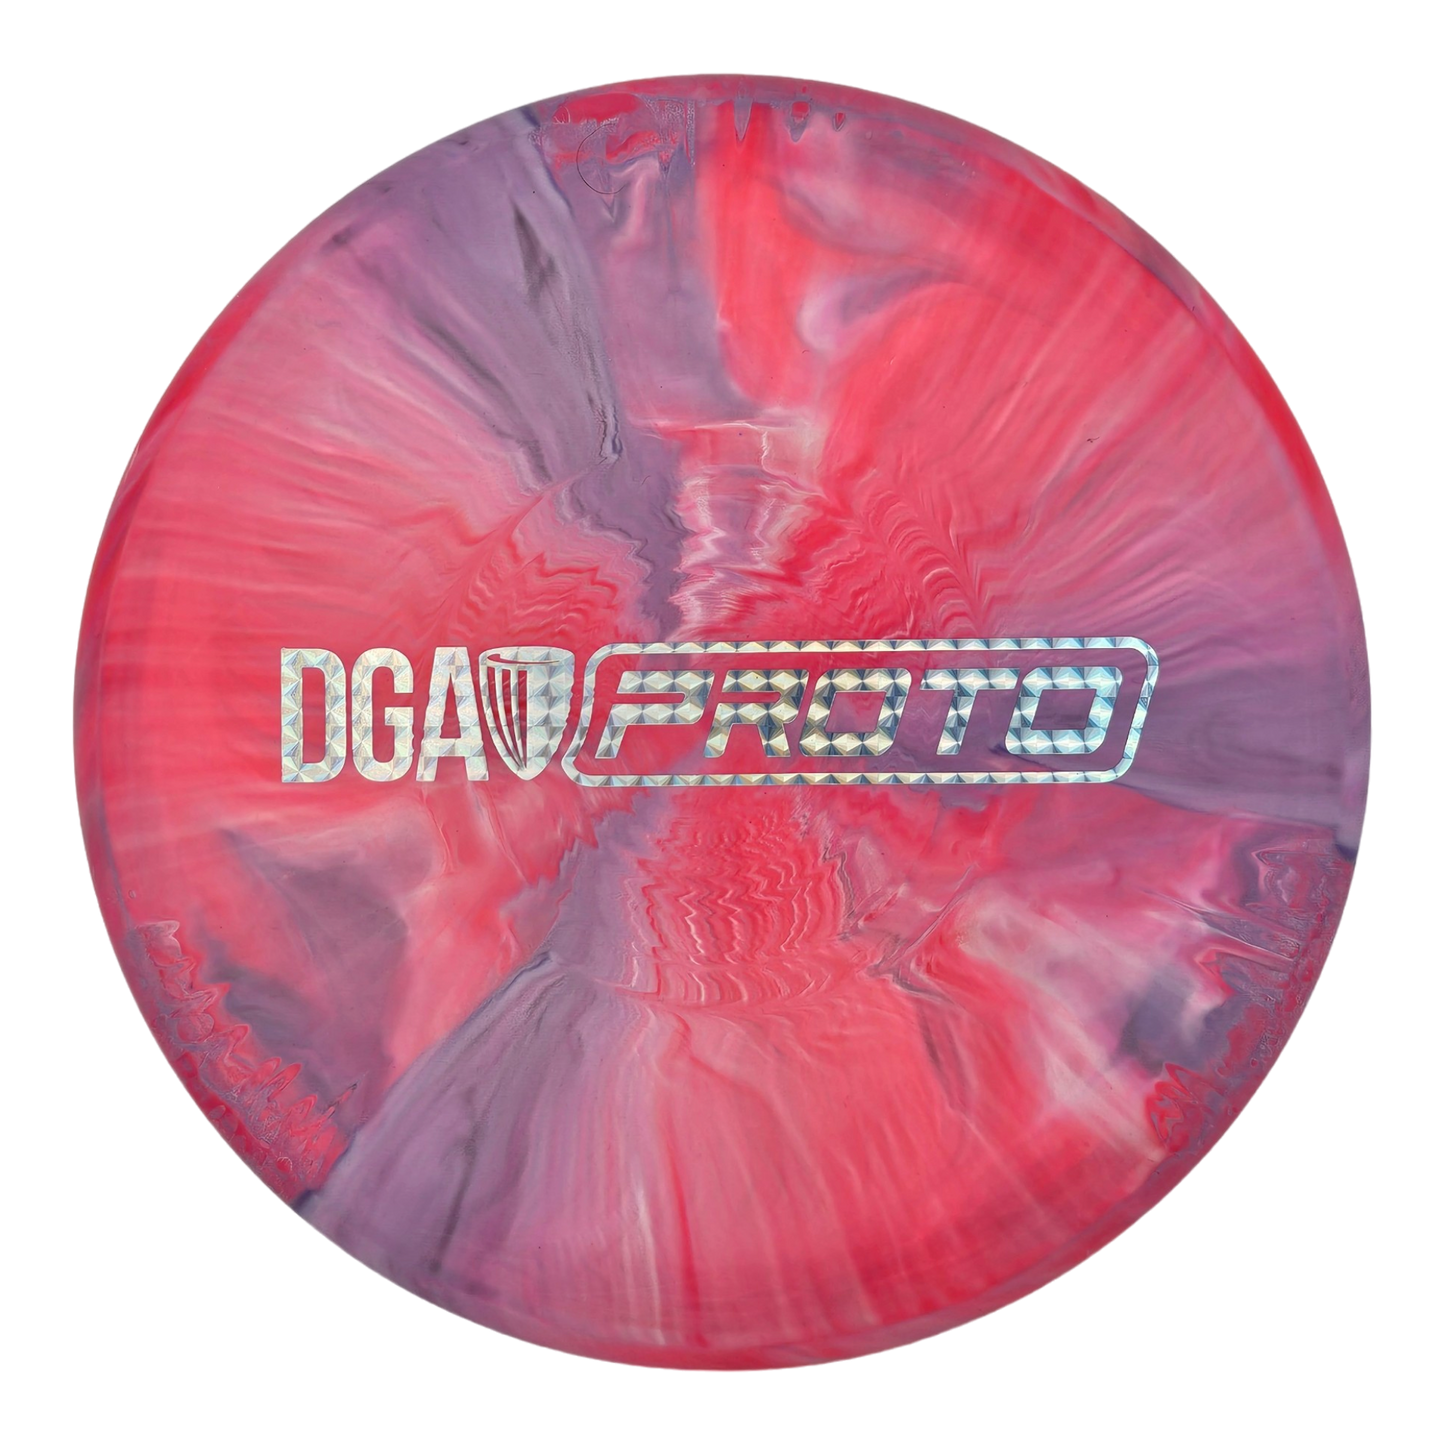 DGA Proto Swirl Base Blend Surf